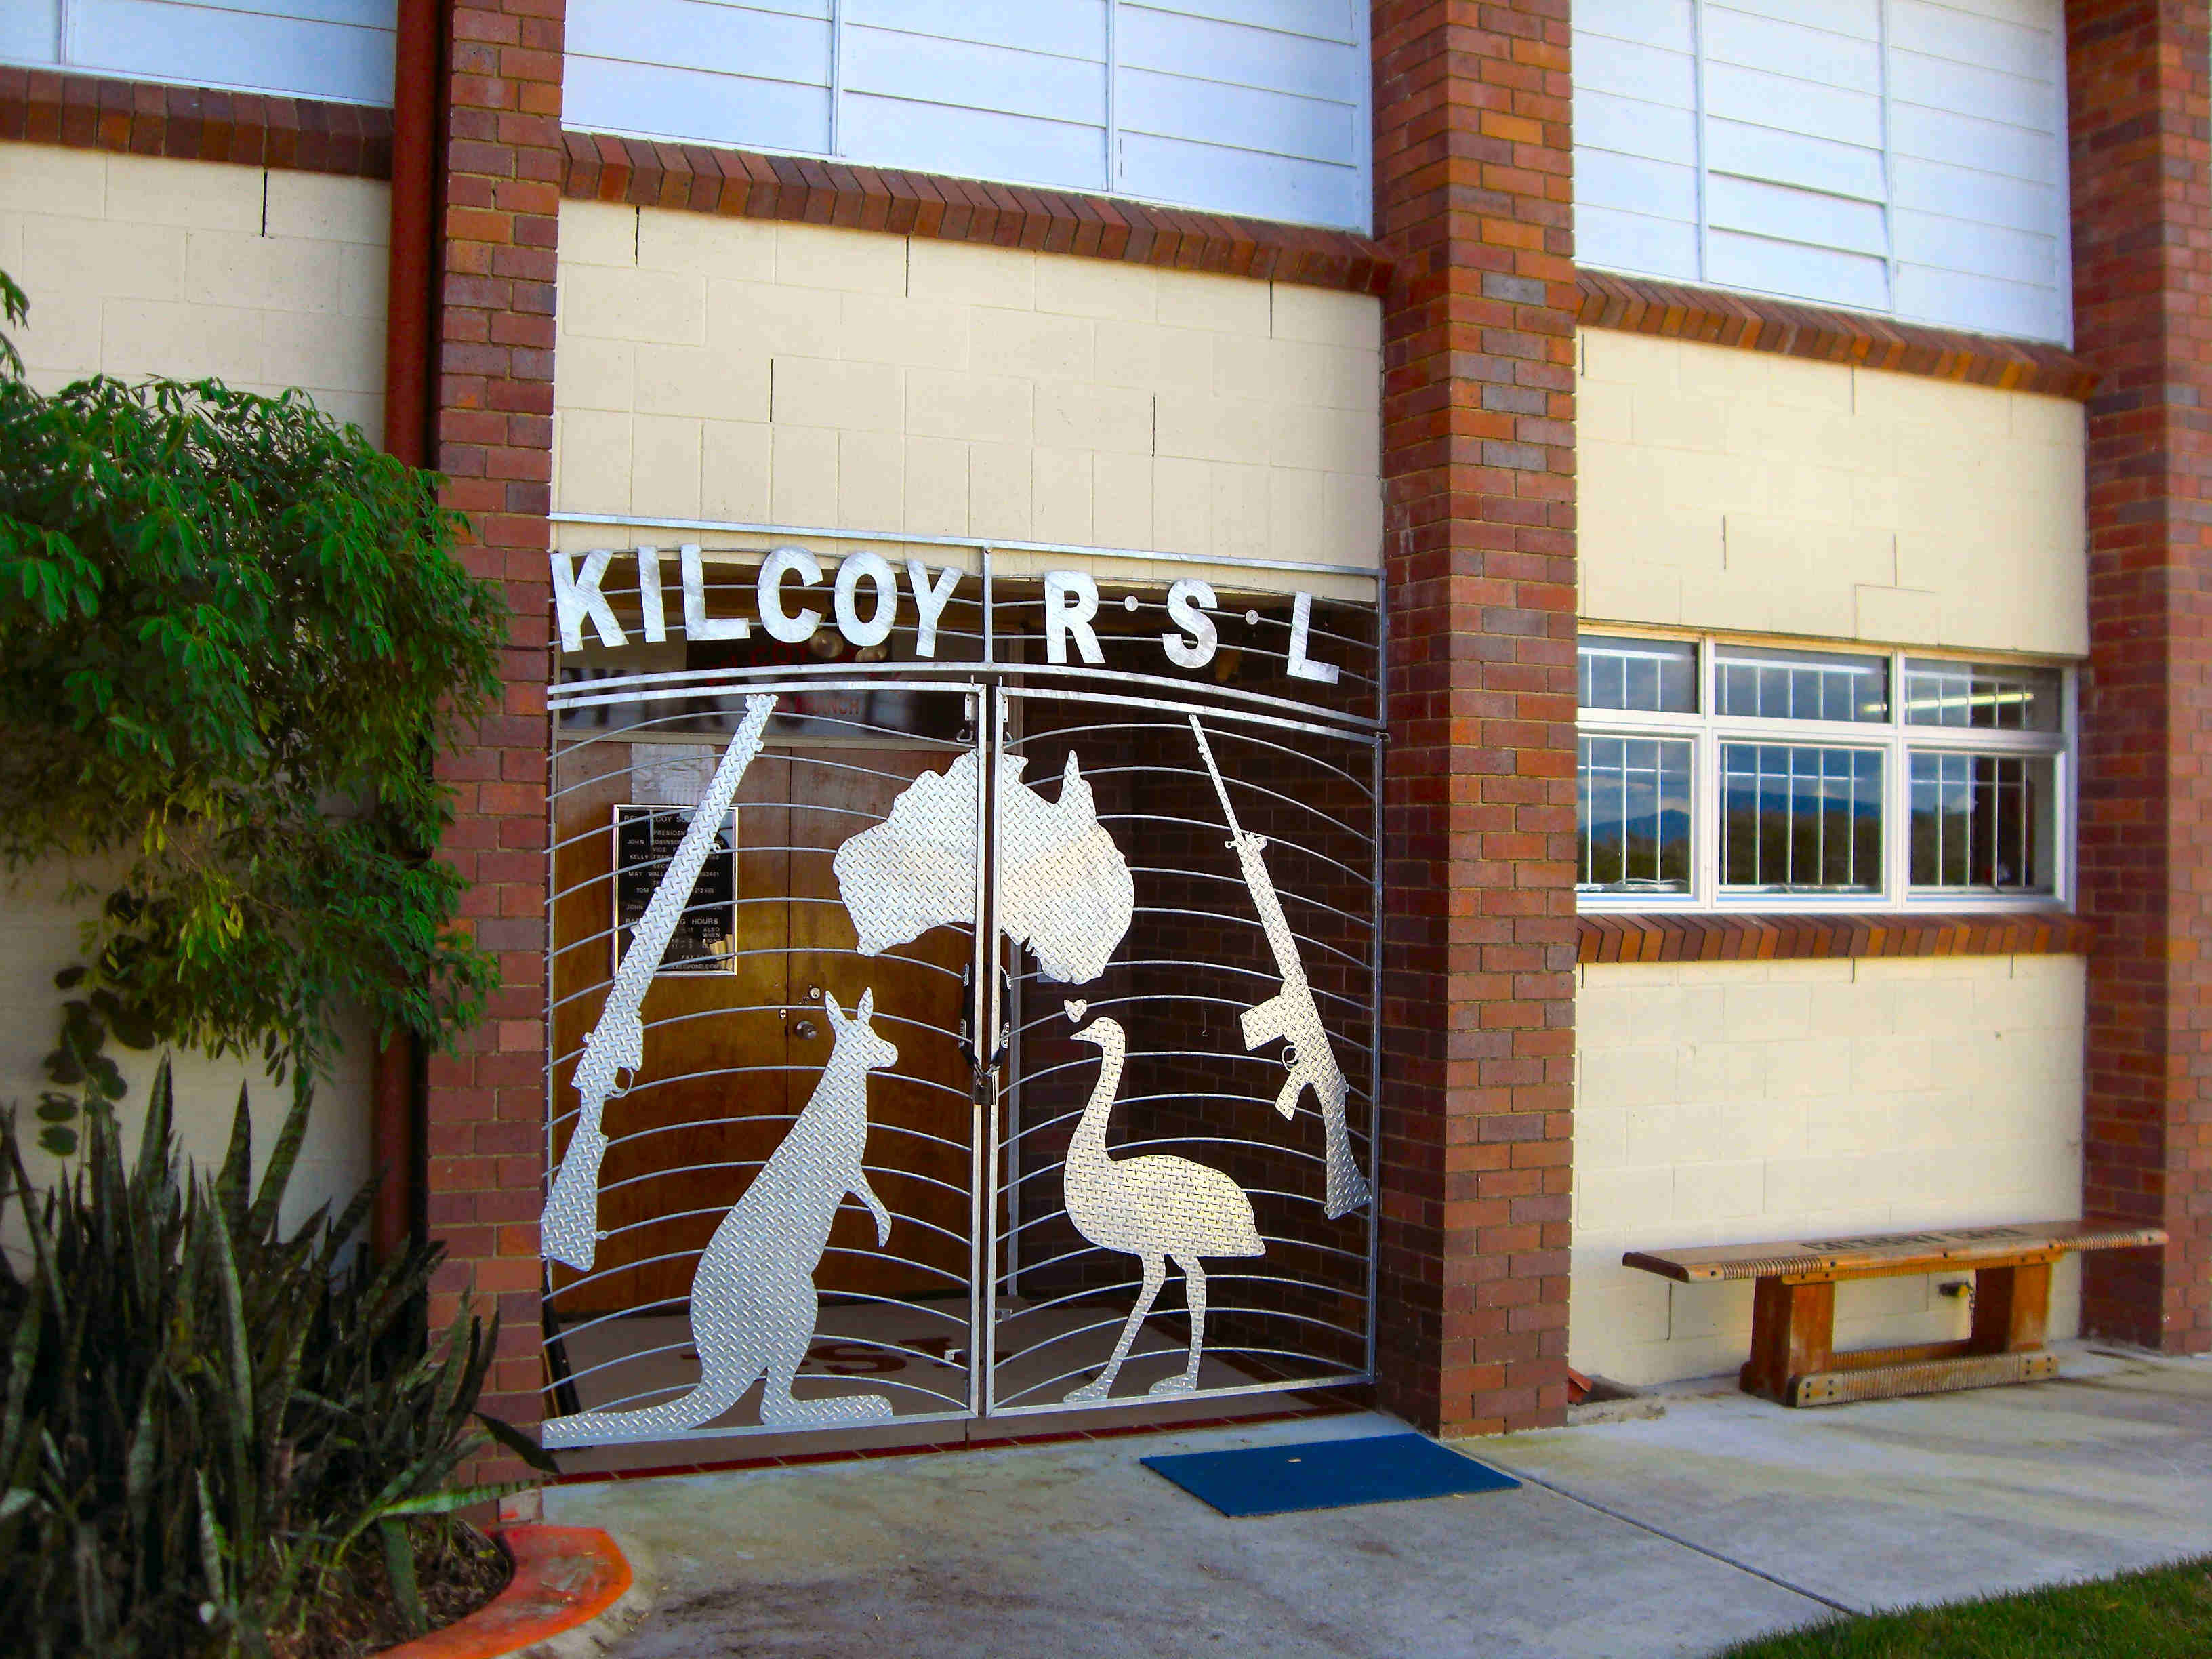 Kilcoy RSL